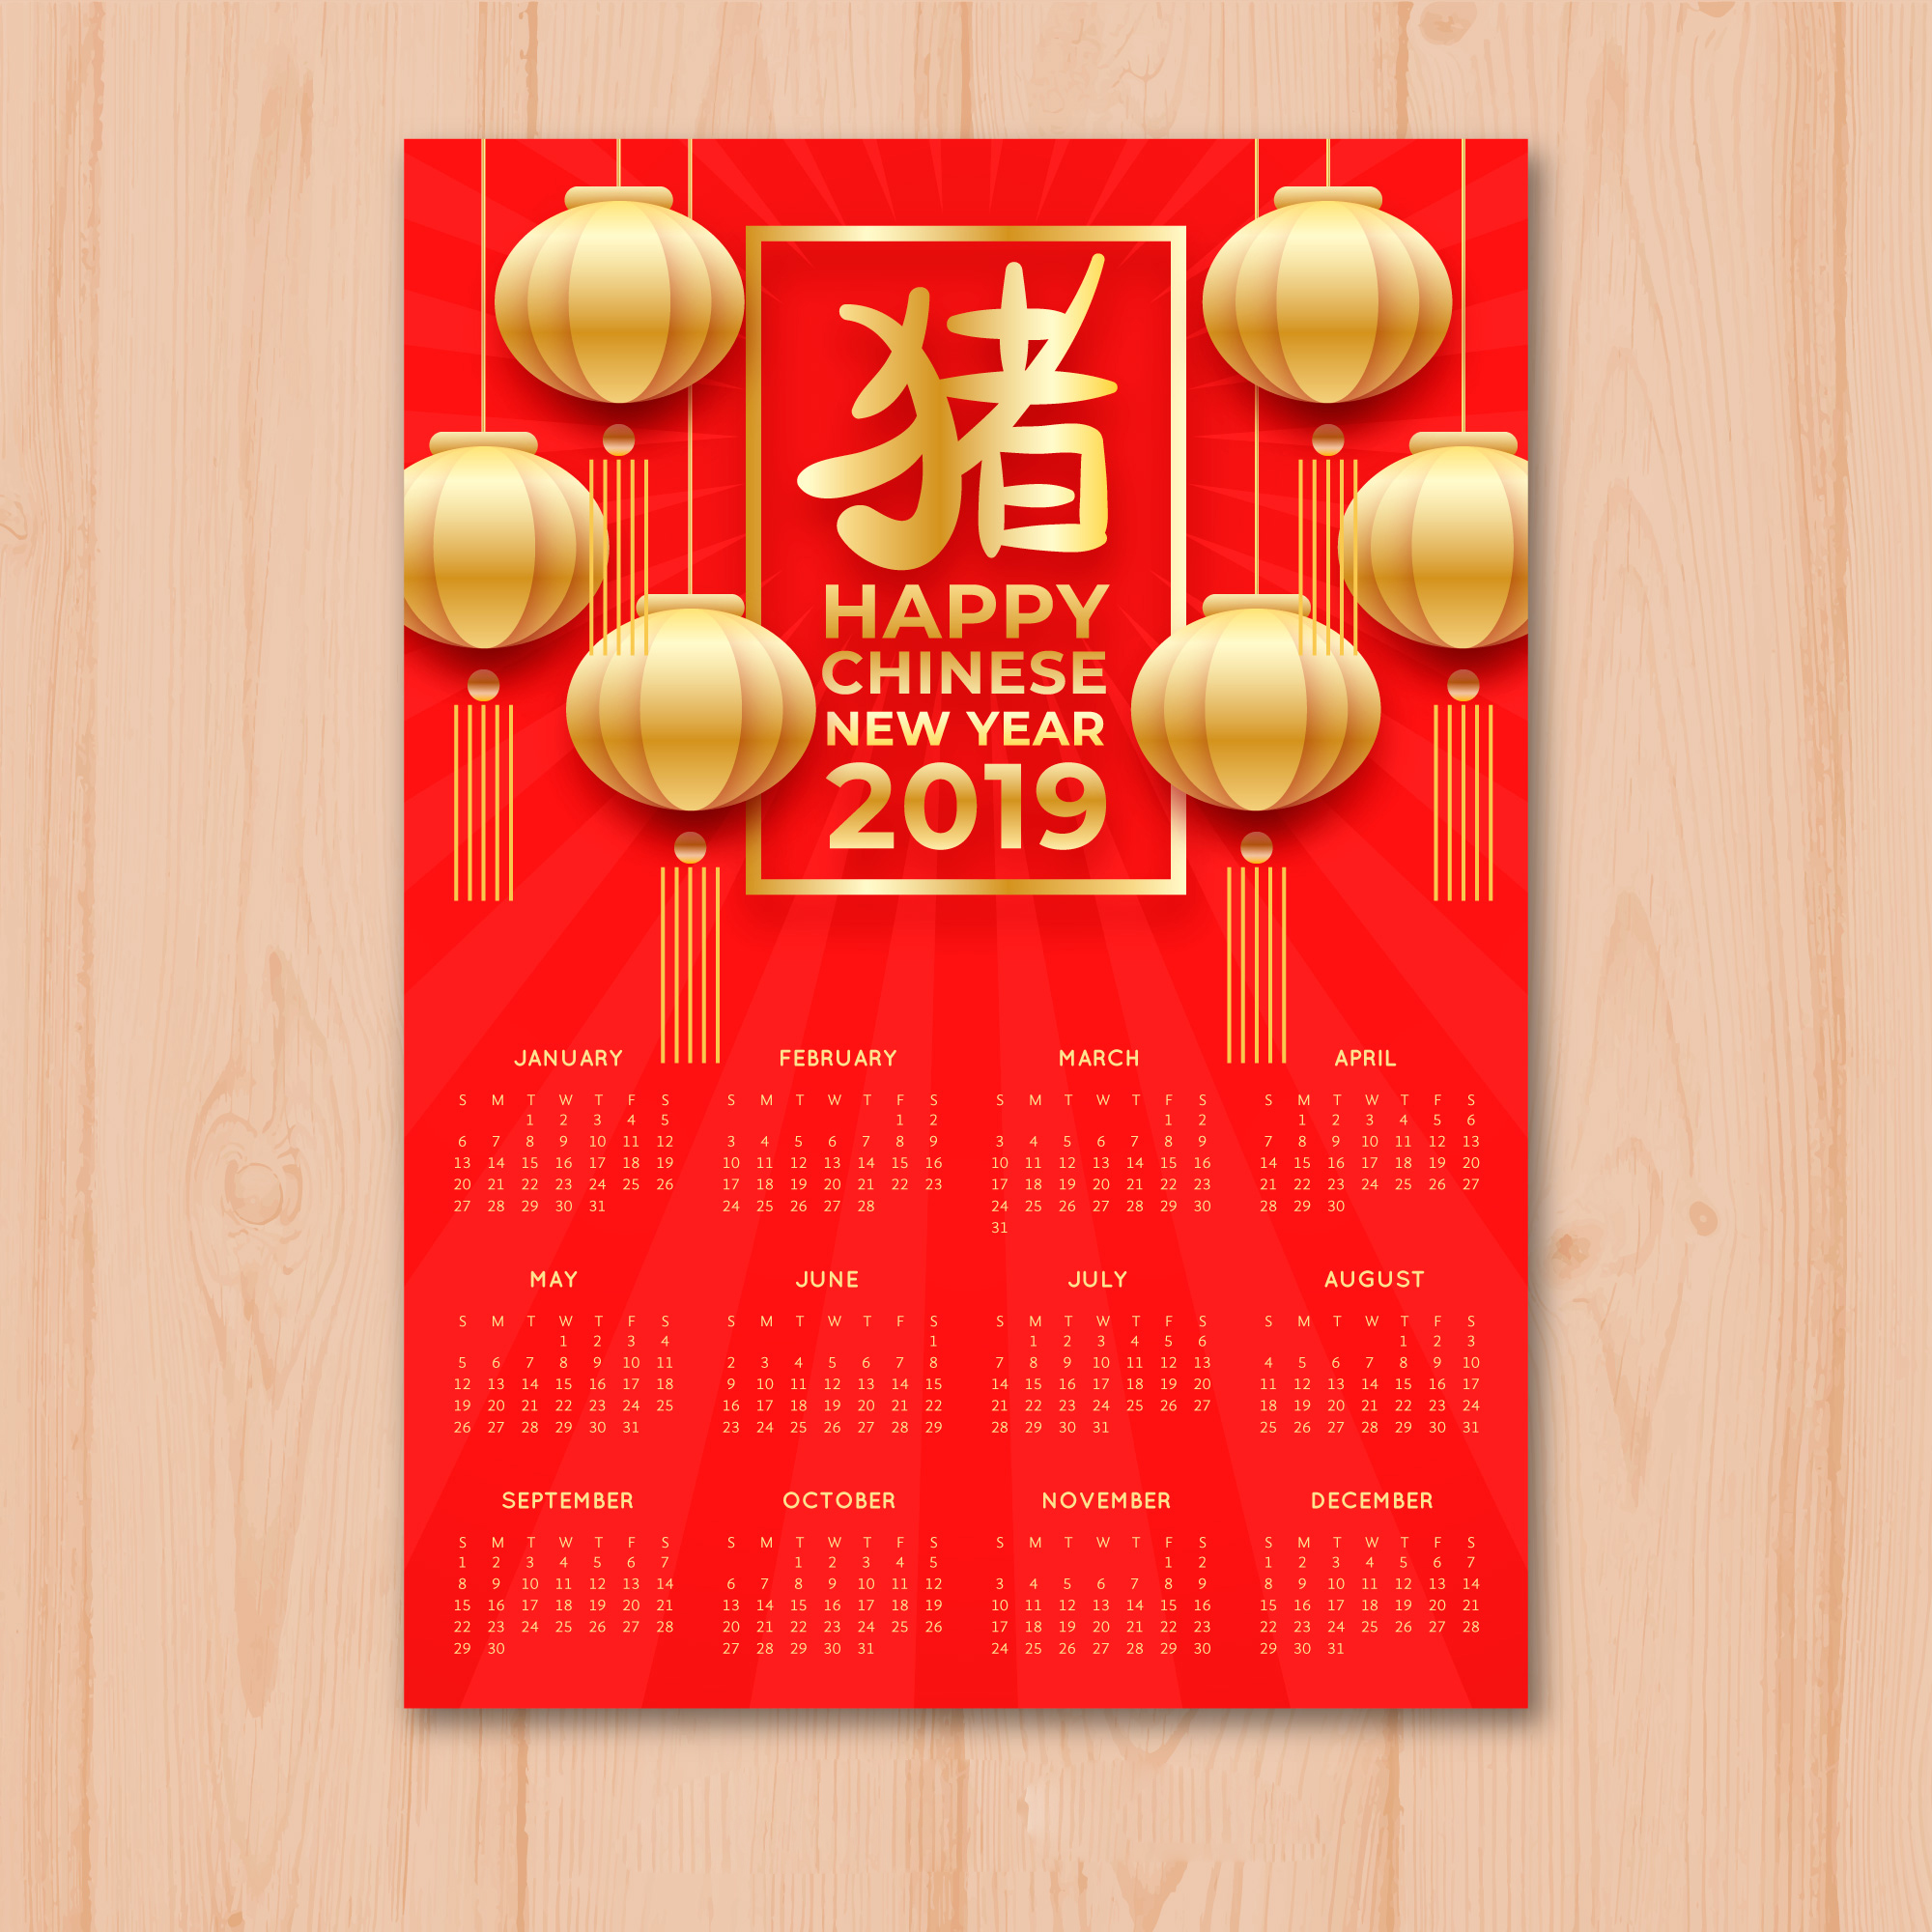 时尚简约的2019新年挂历日历矢量素材模板 Stylish Minimalist 2019 New Year Calendar Calendar Vector Material Template插图3